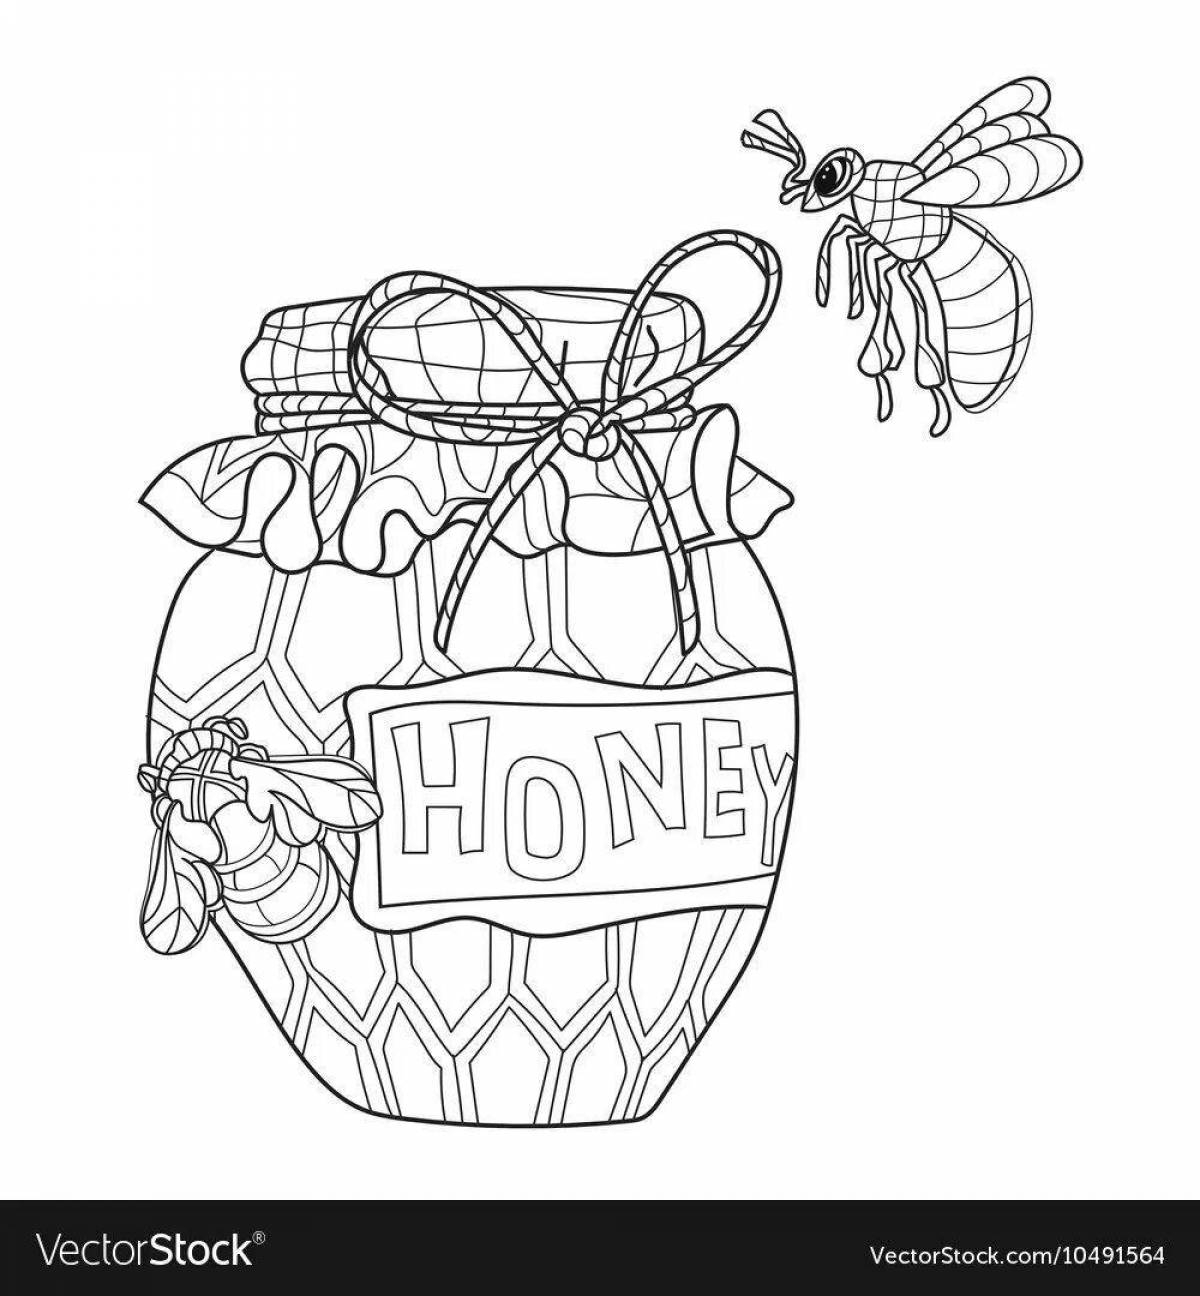 Joyful honey coloring for kids